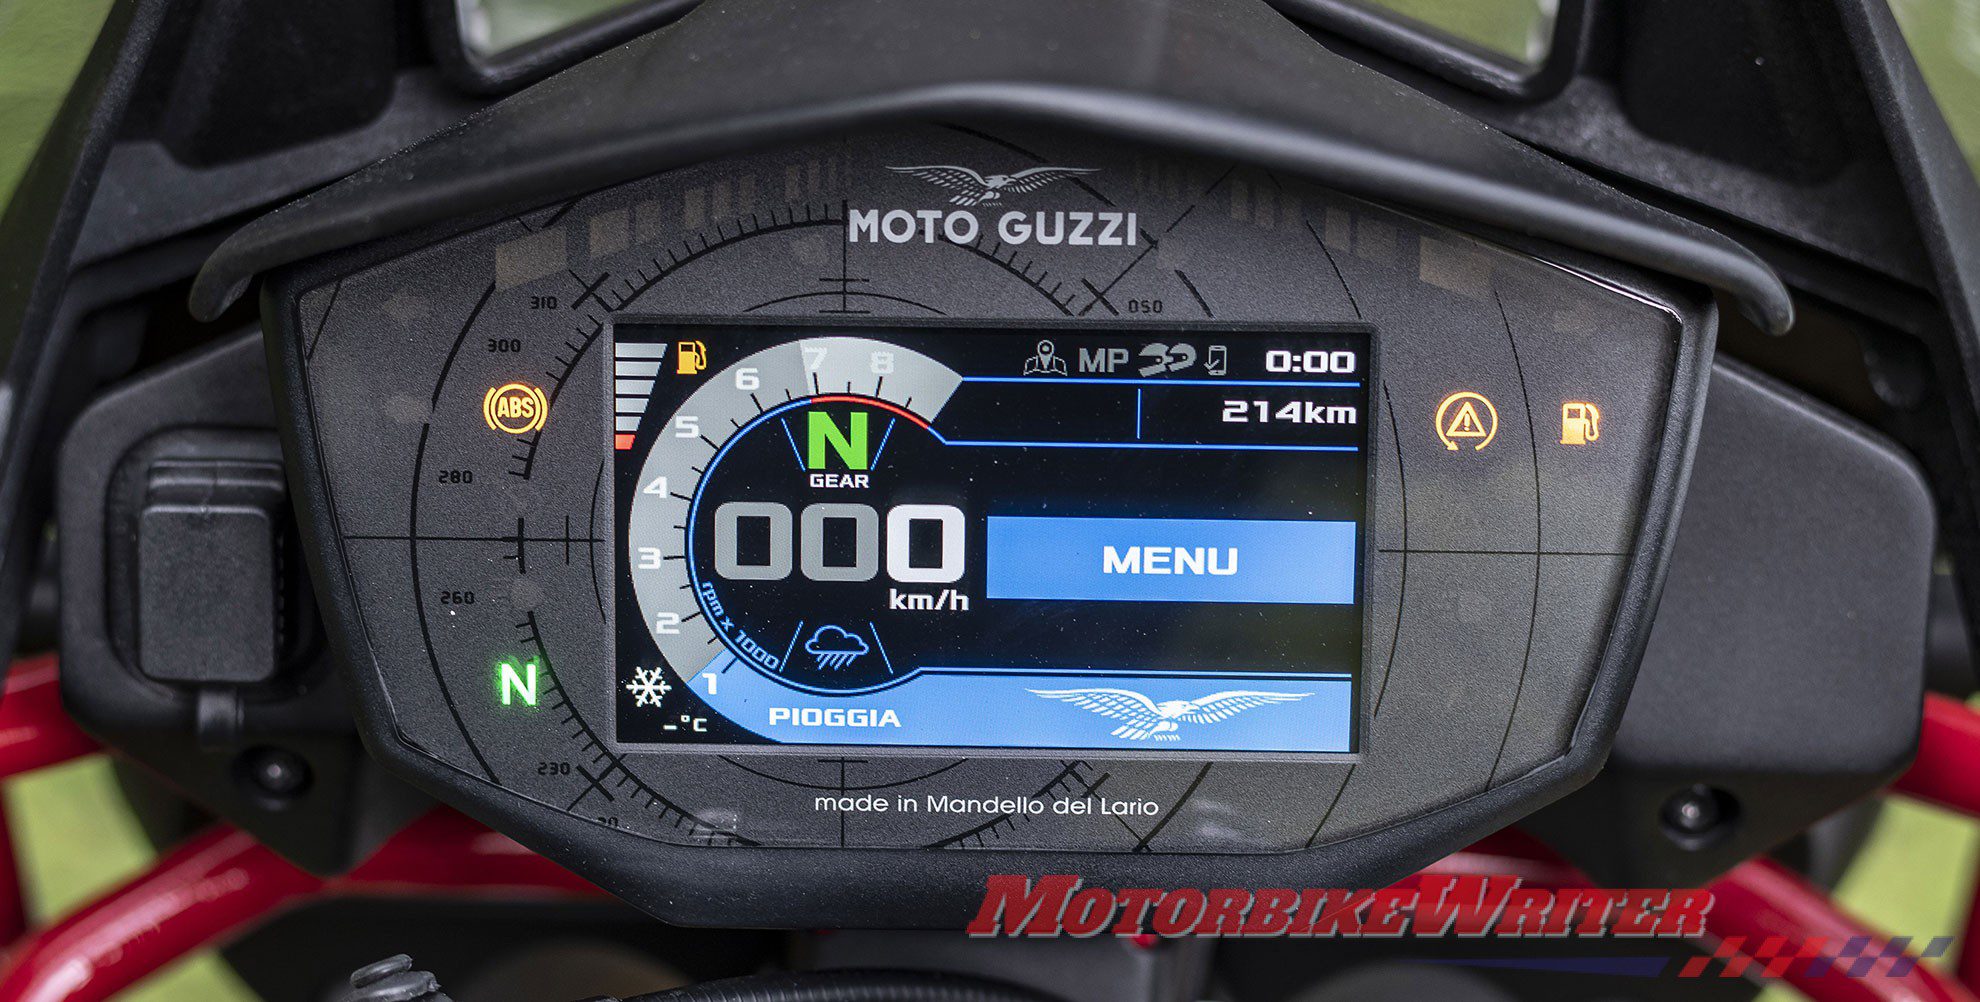 Moto Guzzi V85 TT specs